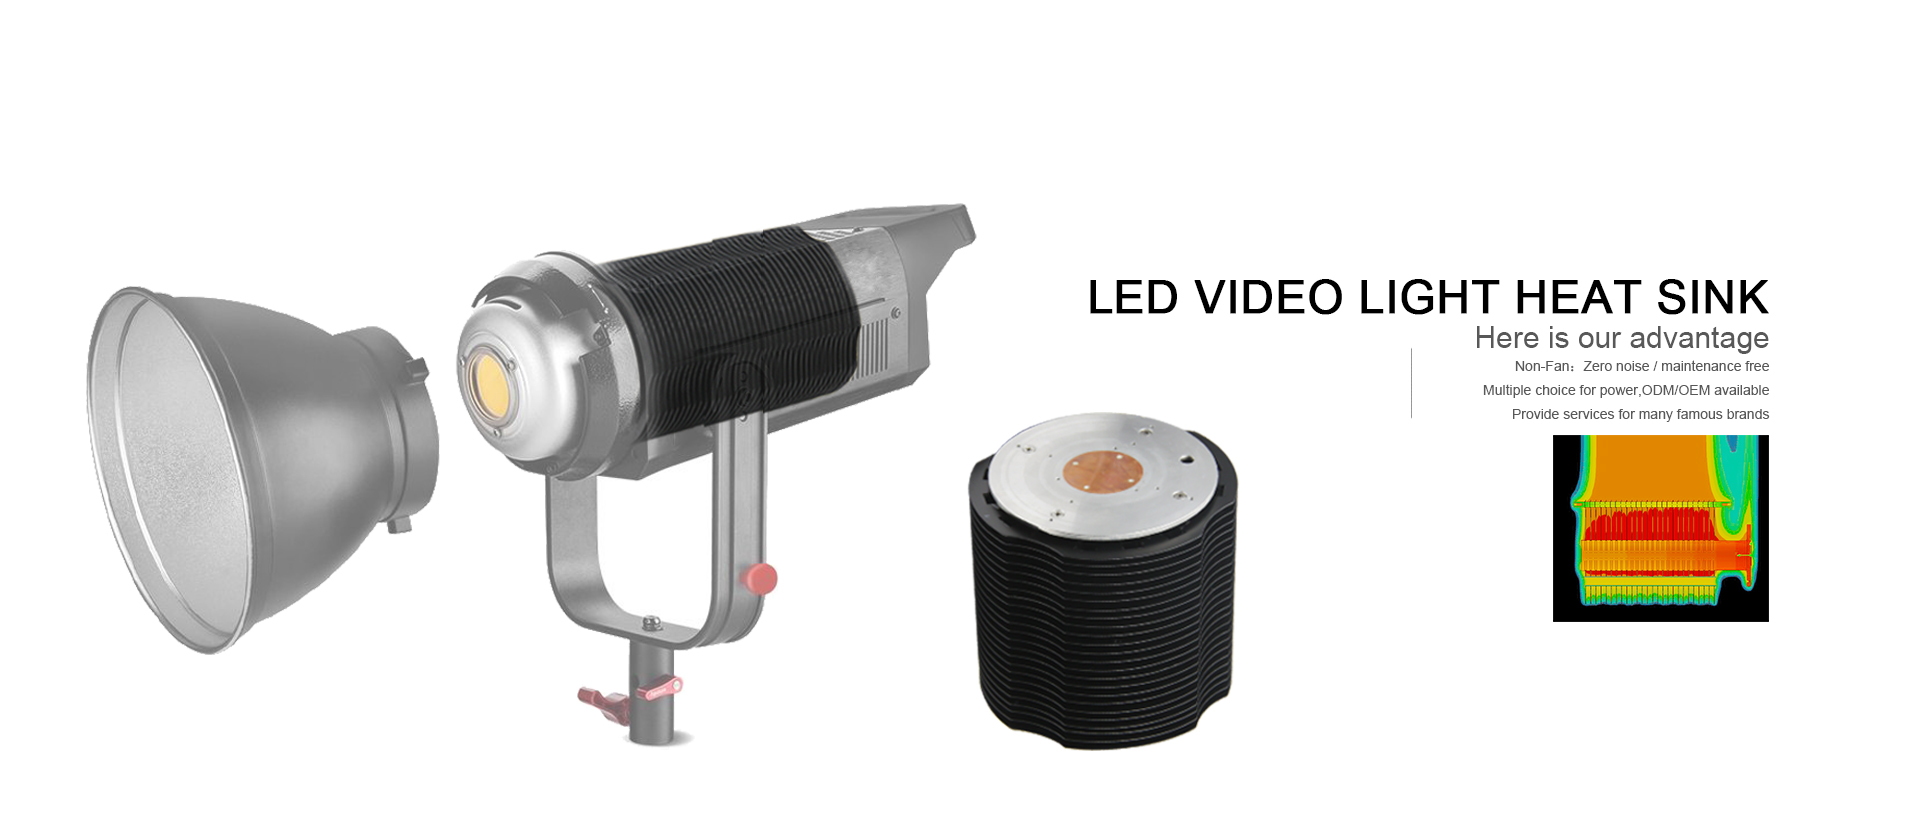 LED video light heat sink